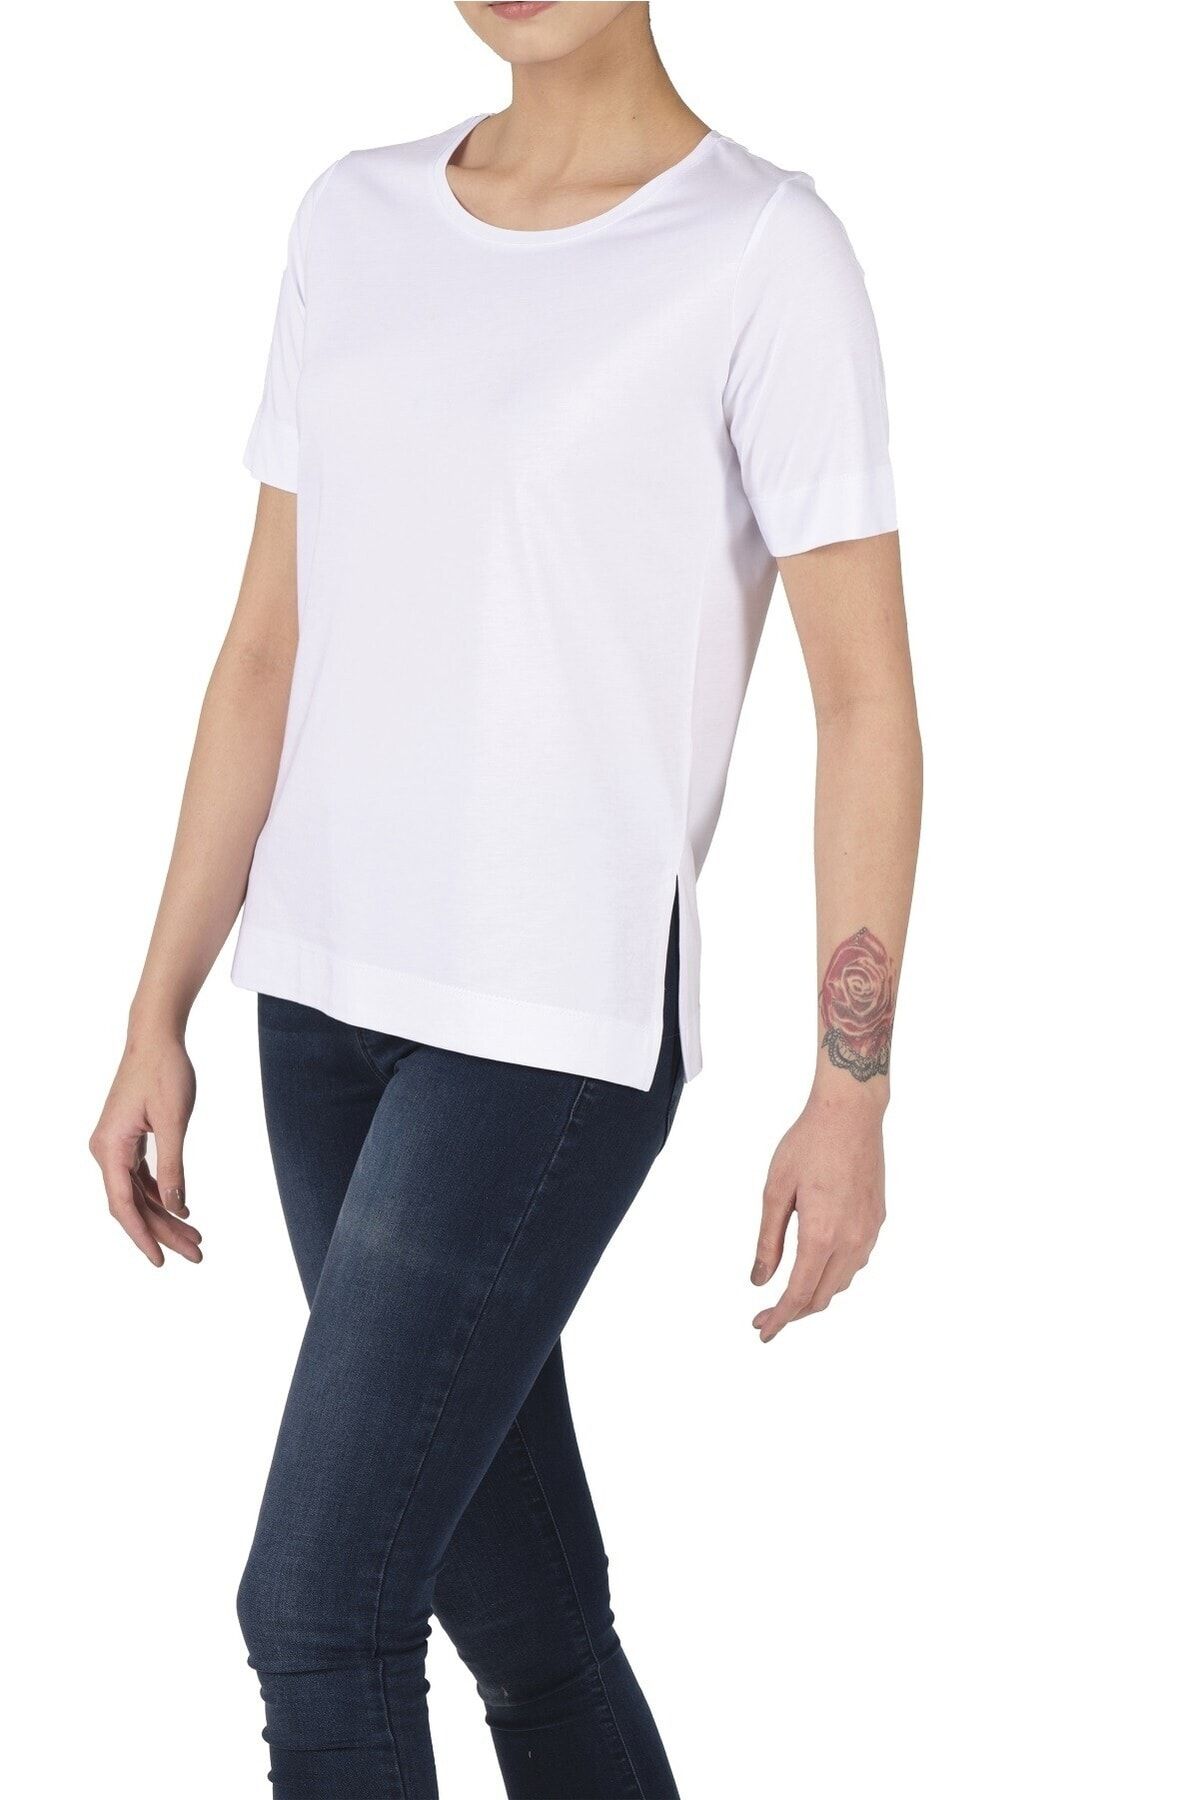 fsm1453 Kadın Pamuklu Modal Kısa Kollu Yırtmaçlı Comfort Fit T-shirt -2405